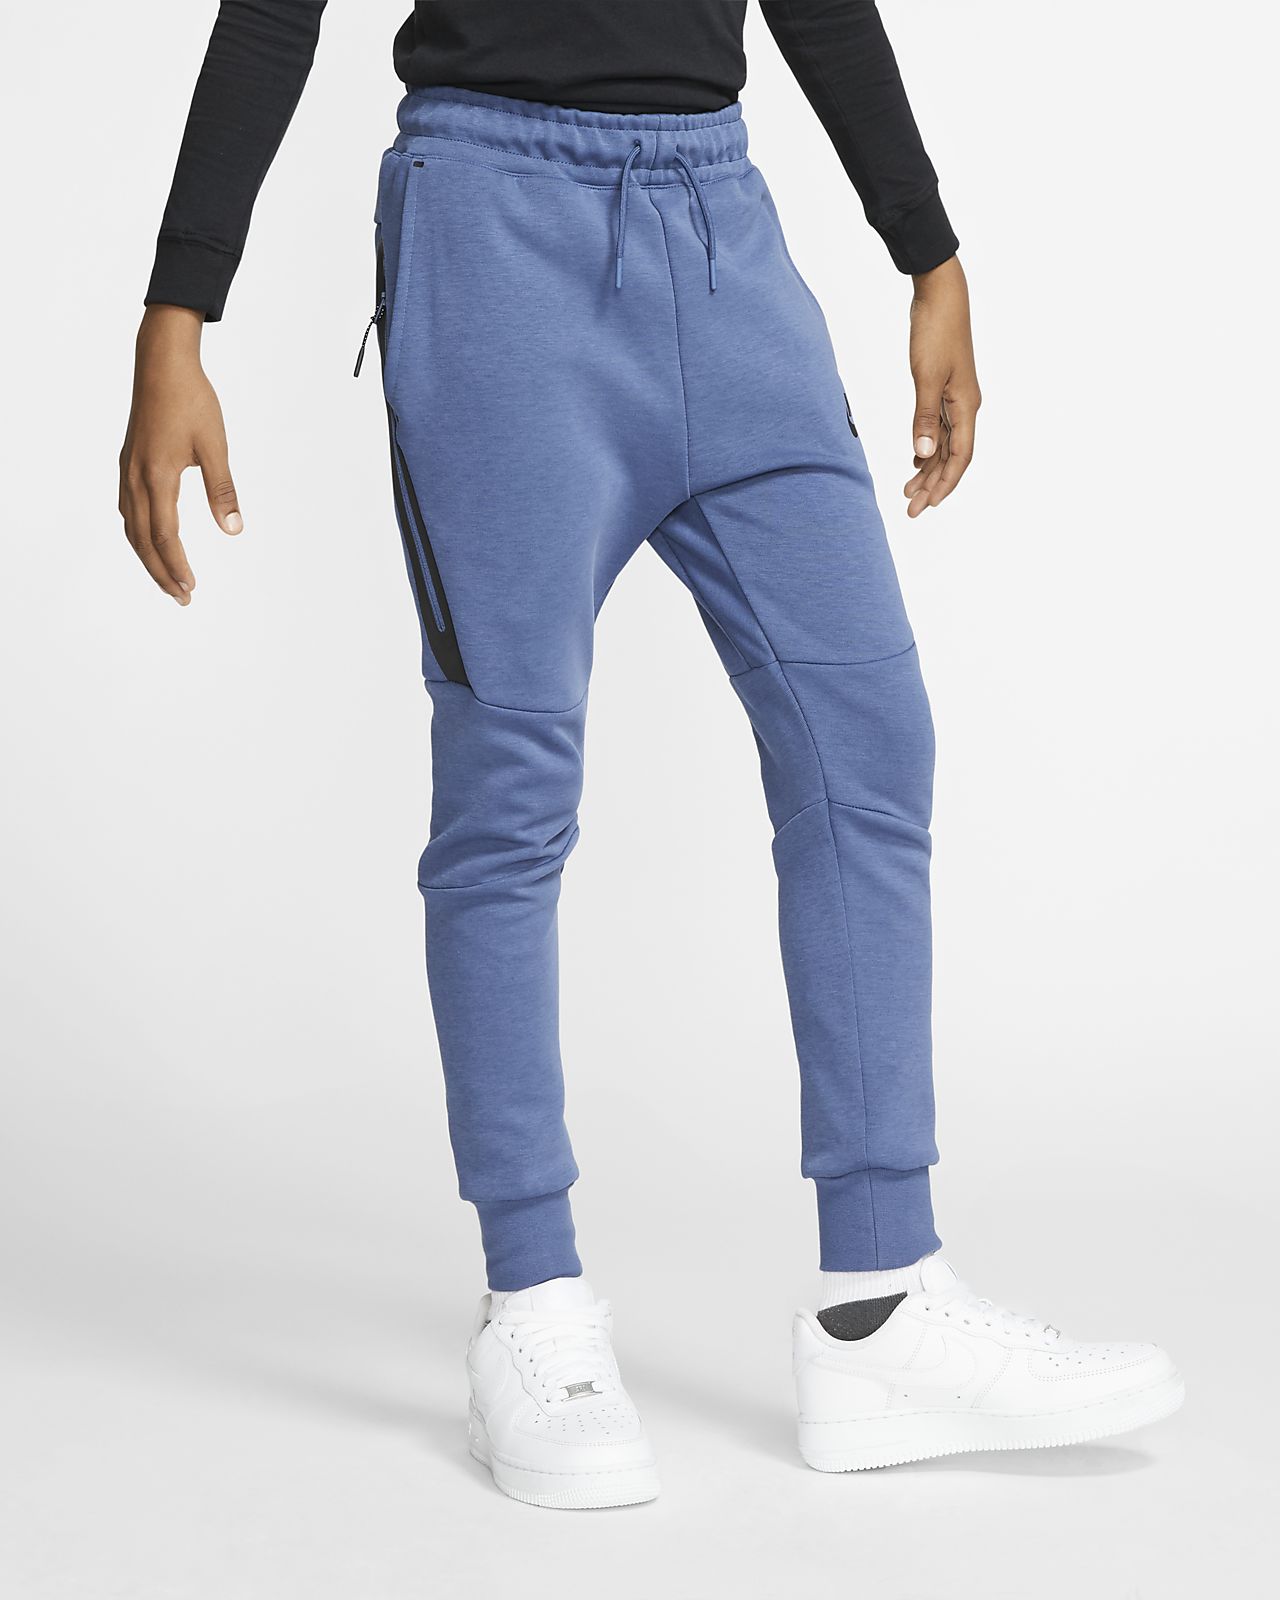 navy blue nike tech fleece pants